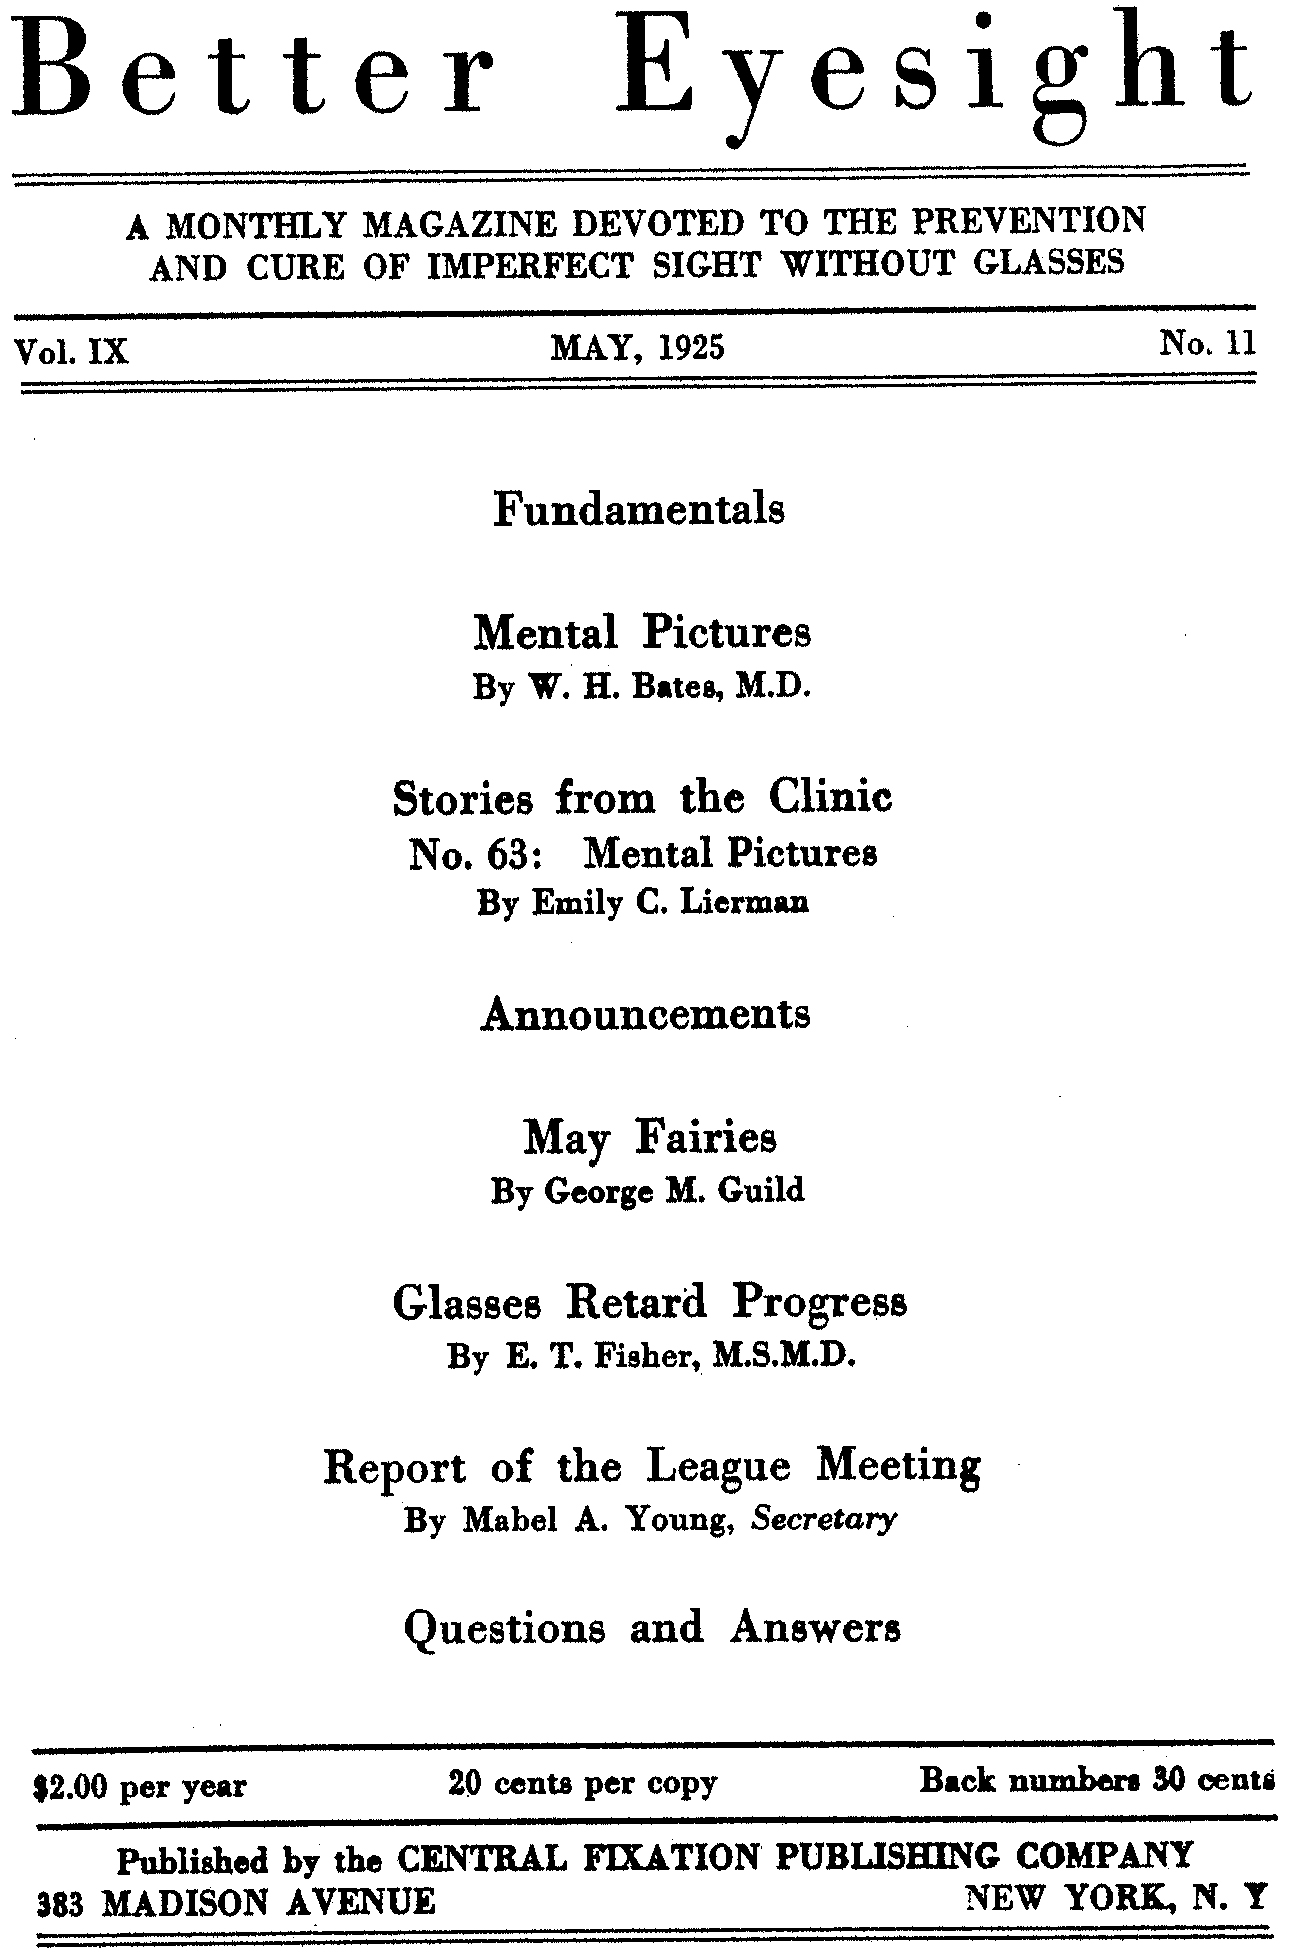 Better Eyesight - May 1925